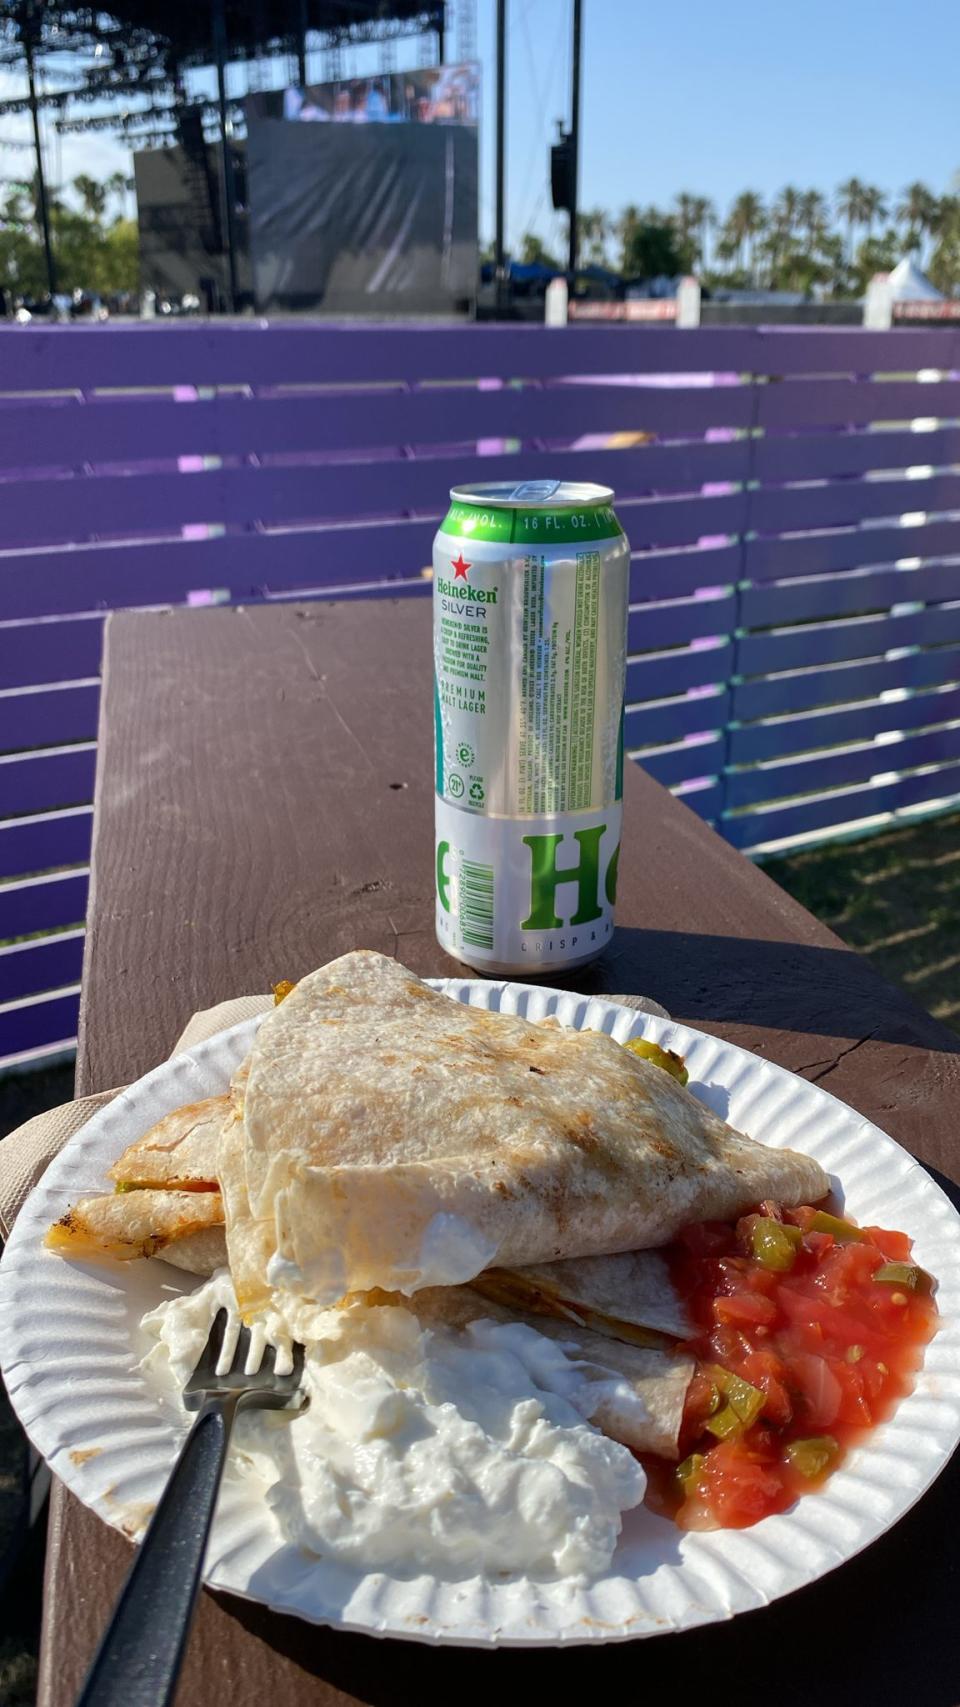 Veggie quesadilla and beer at Coachella (Matthew Cooper/The Independent)